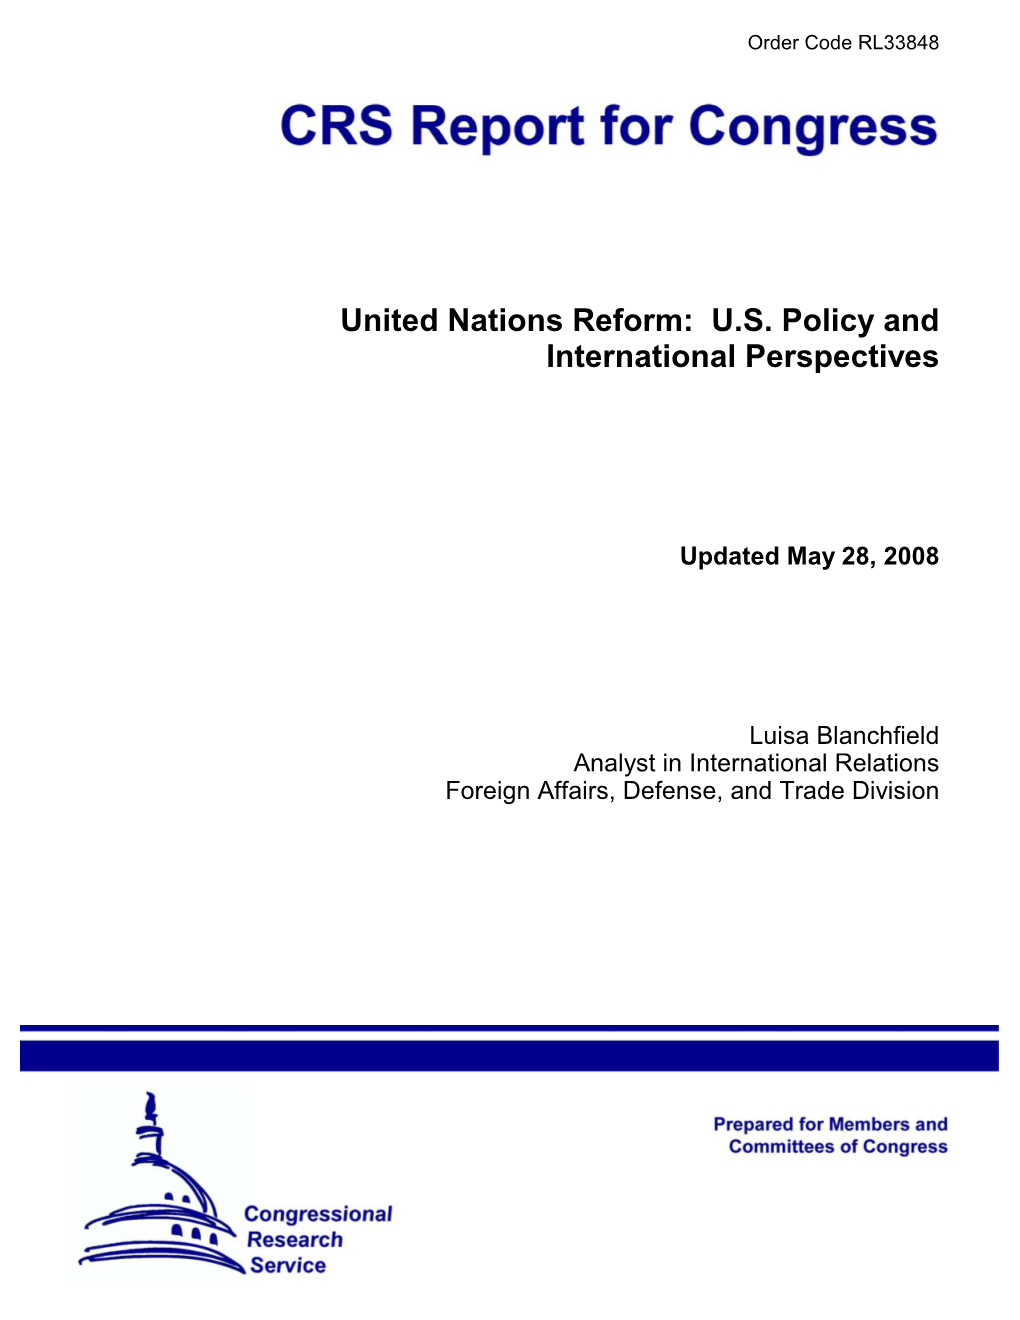 United Nations Reform: U.S